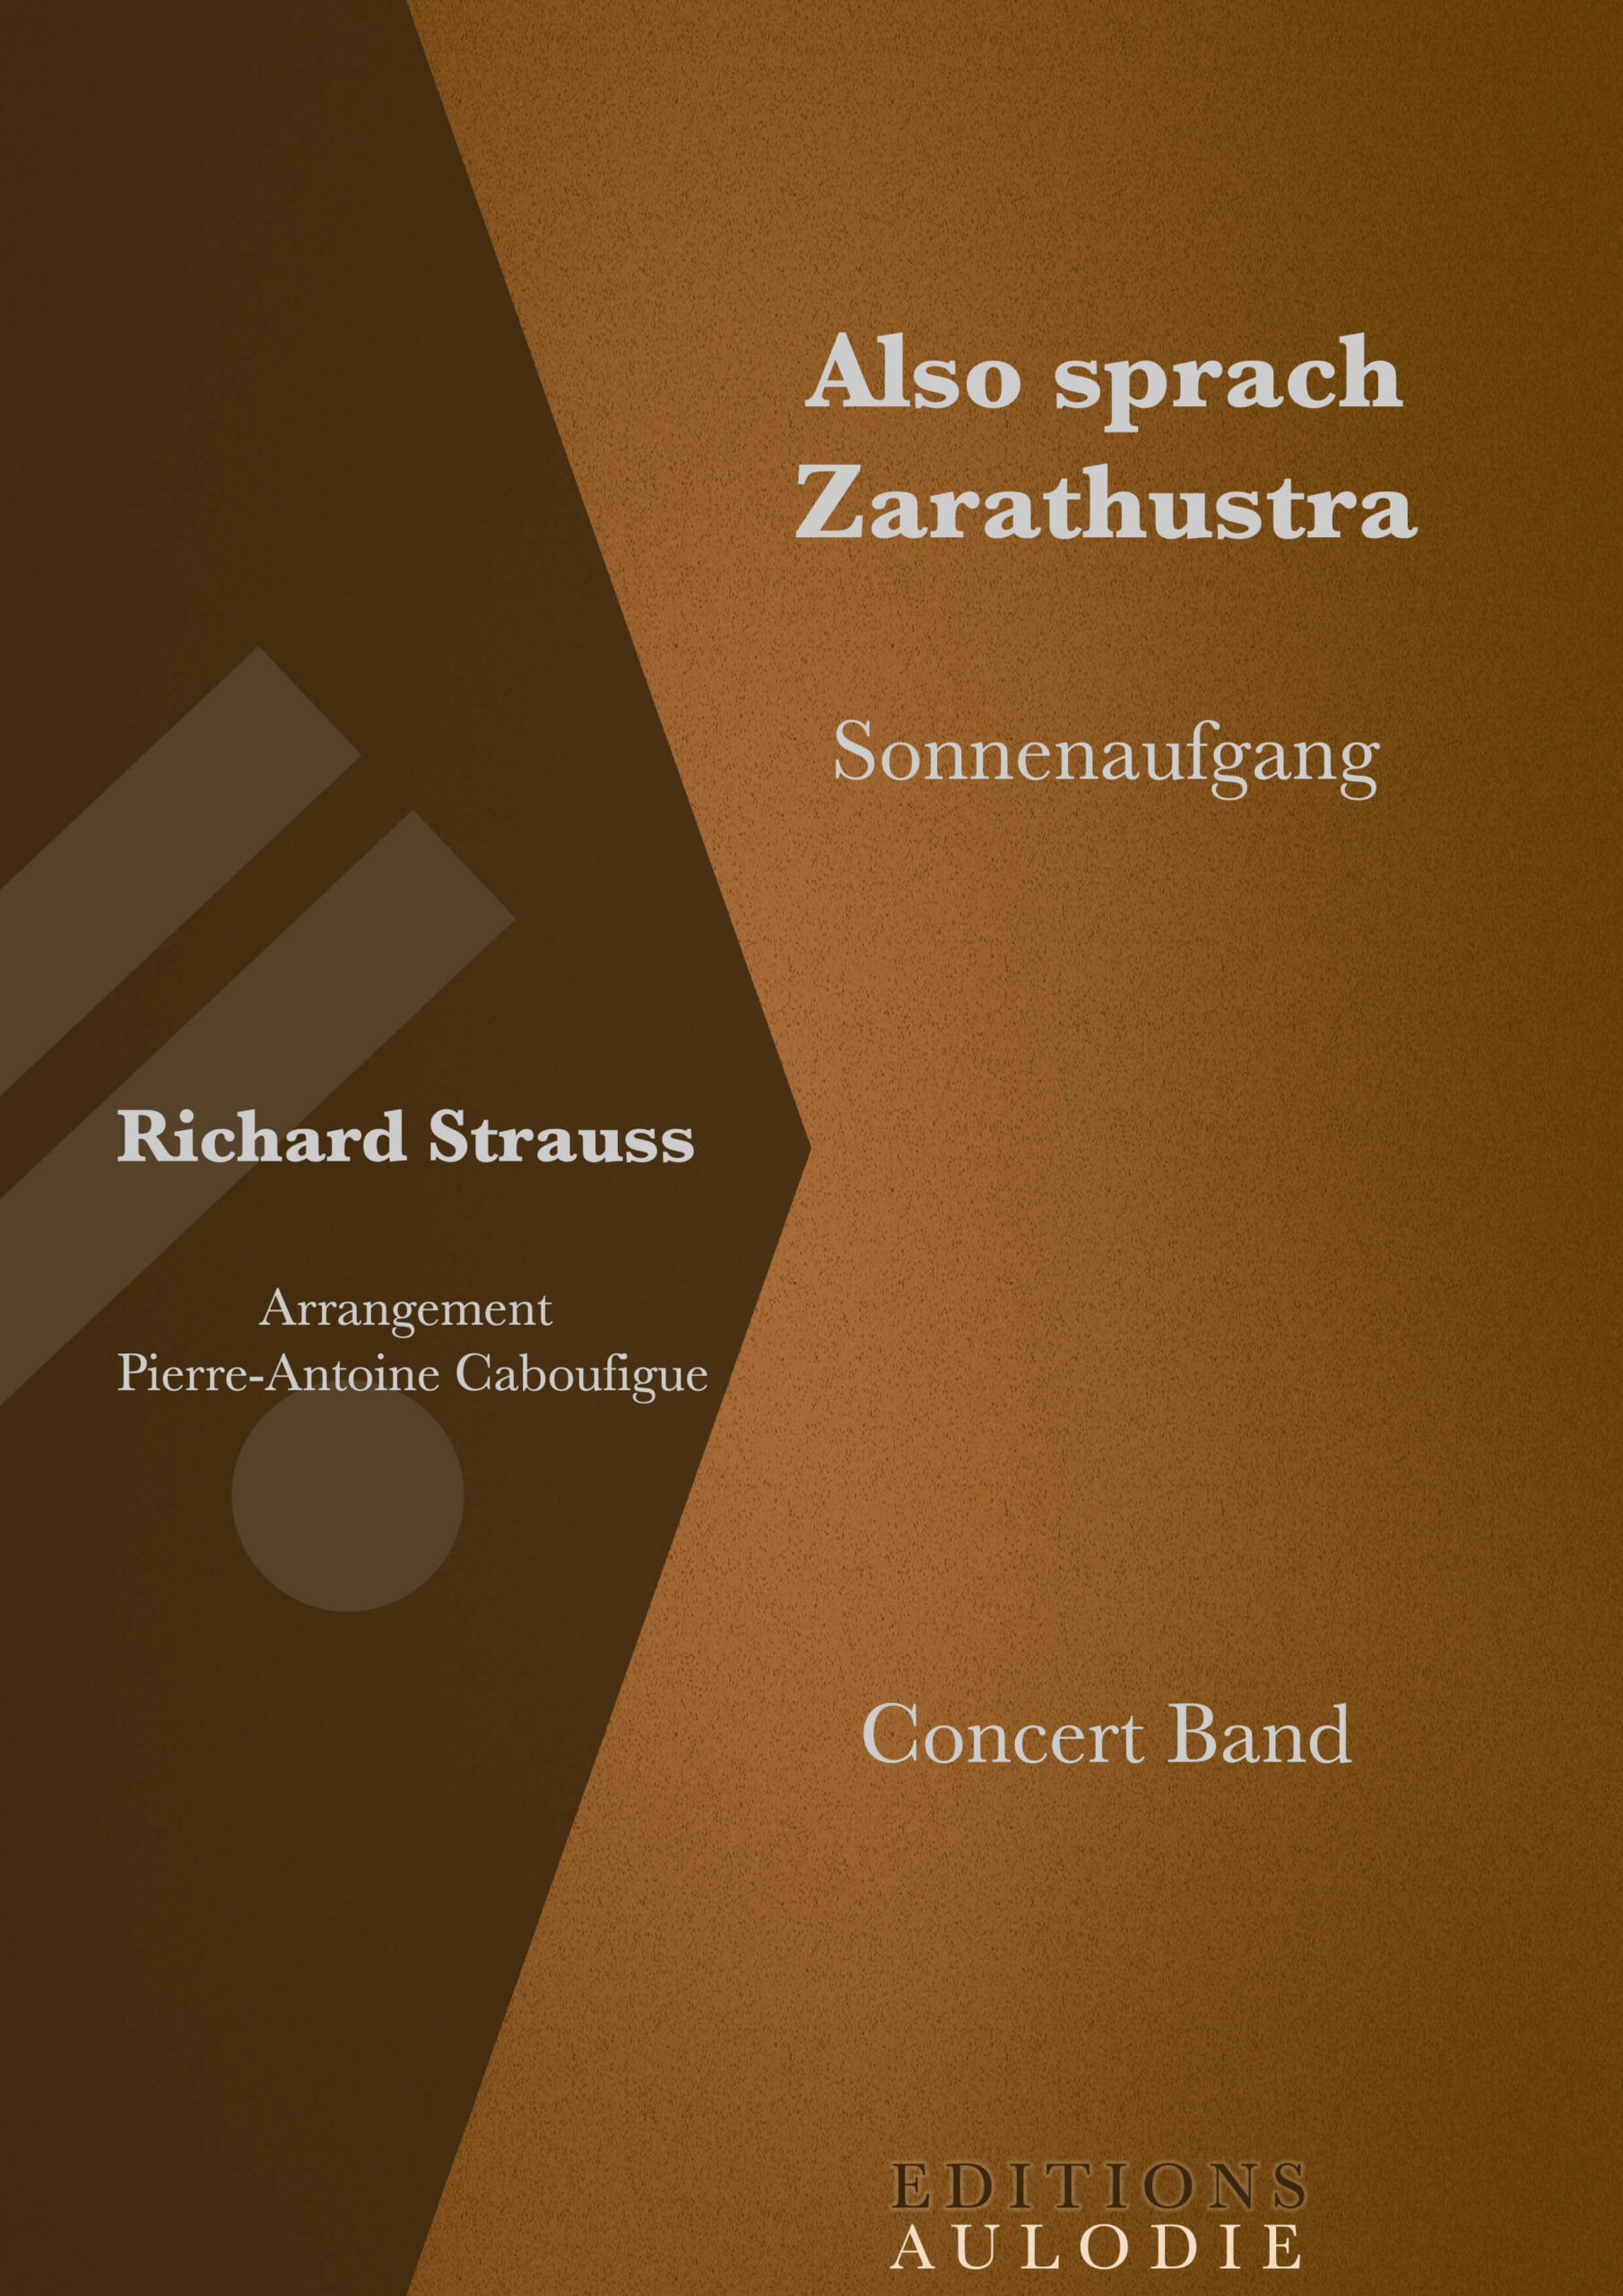 EA01003-Also_sprach_Zarathustra-Sonnenaufgang-Richard_Strauss-Concert_Band